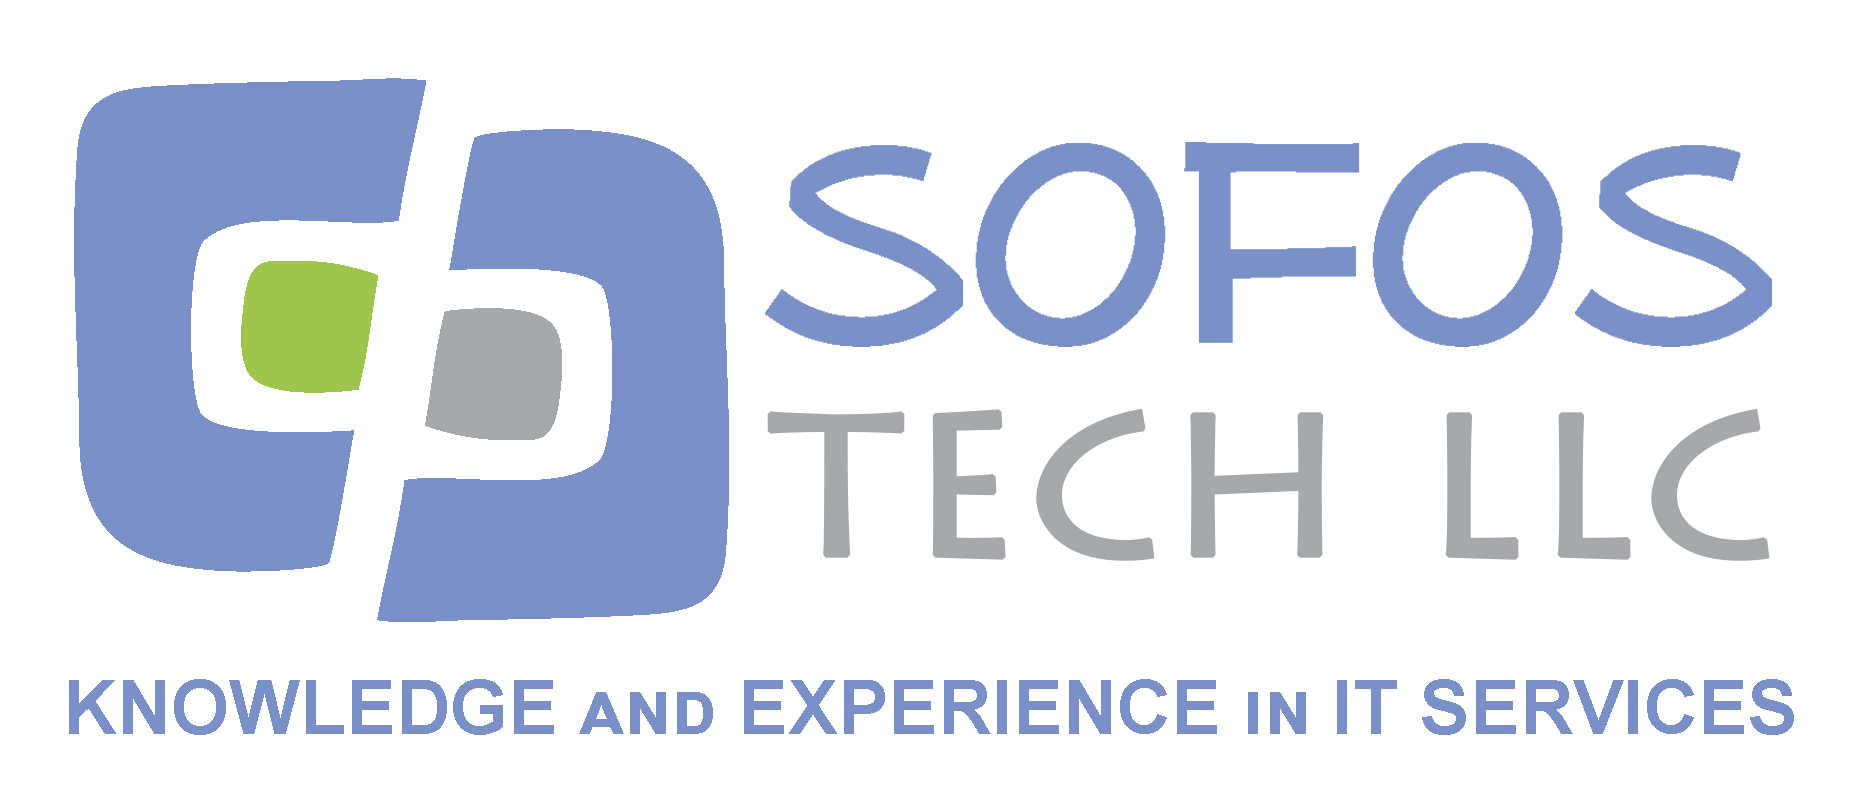 Sofos Tech LLC